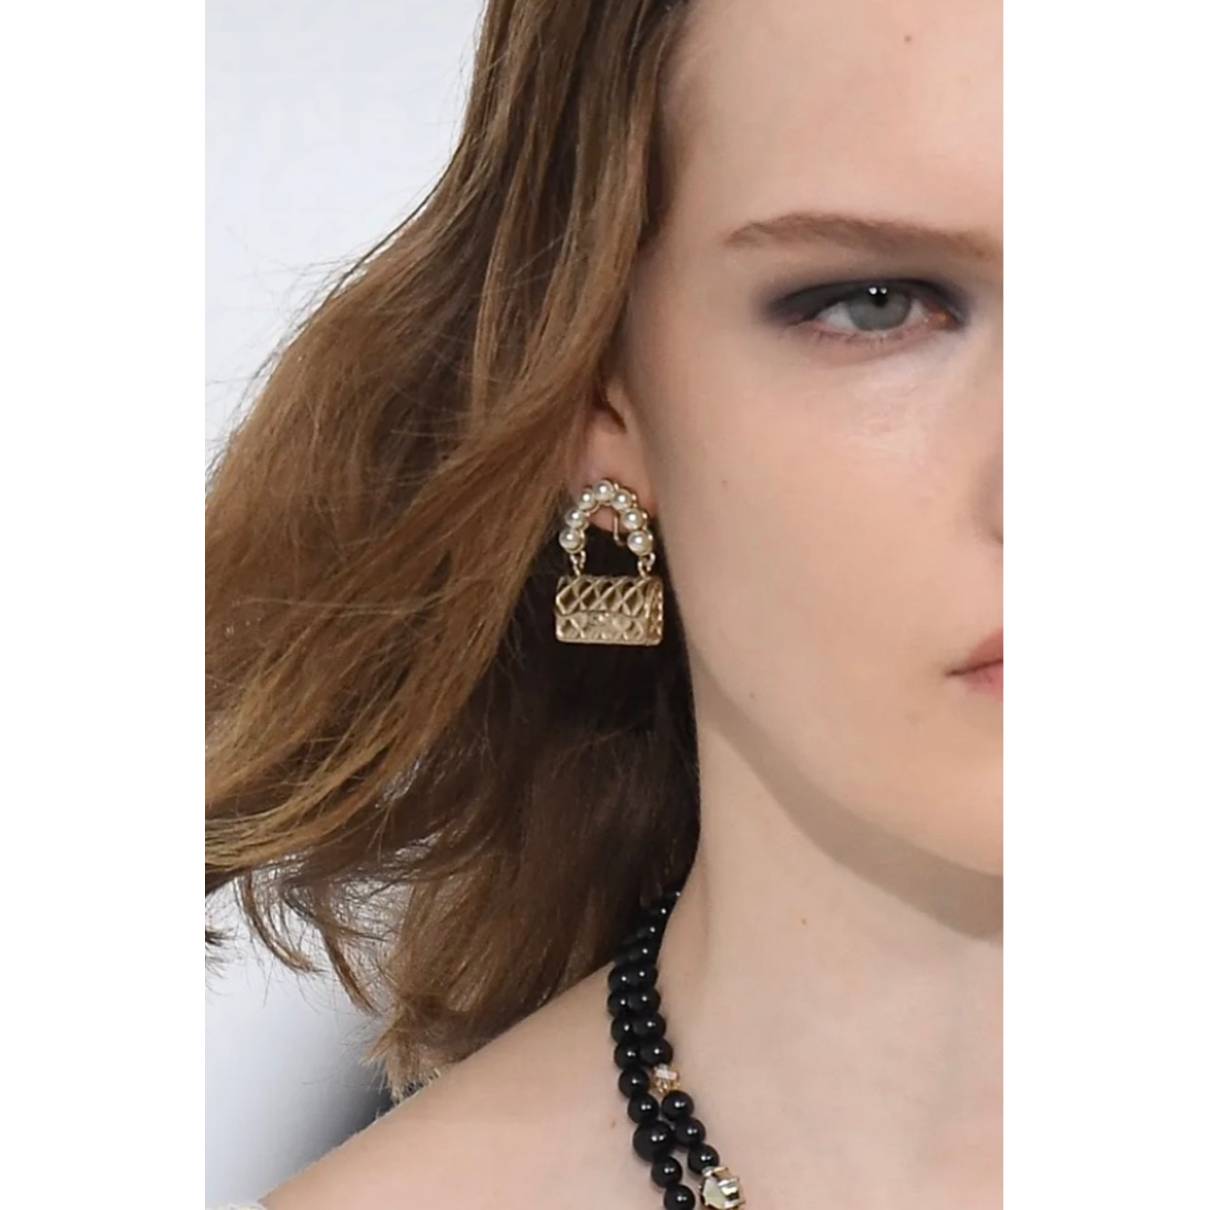 Real Housewives Earrings: Chanel Letter Earrings Latest Trend